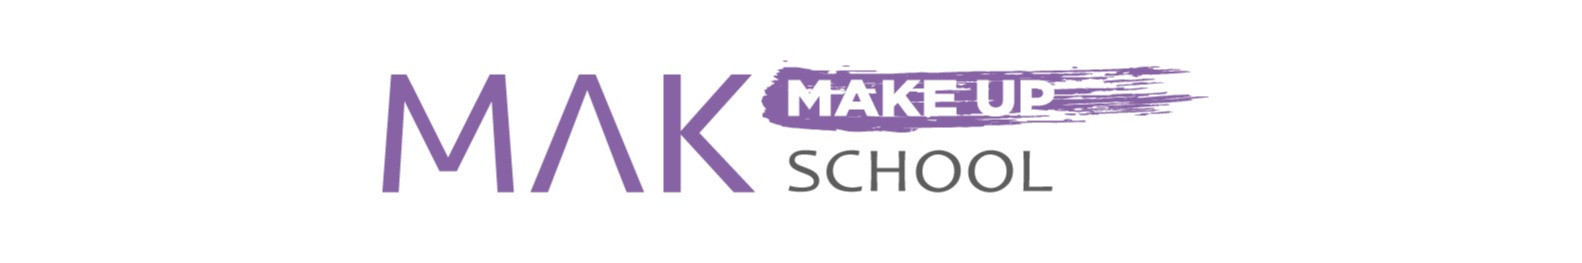 Escuela de Maquillaje en Madrid - Mak School